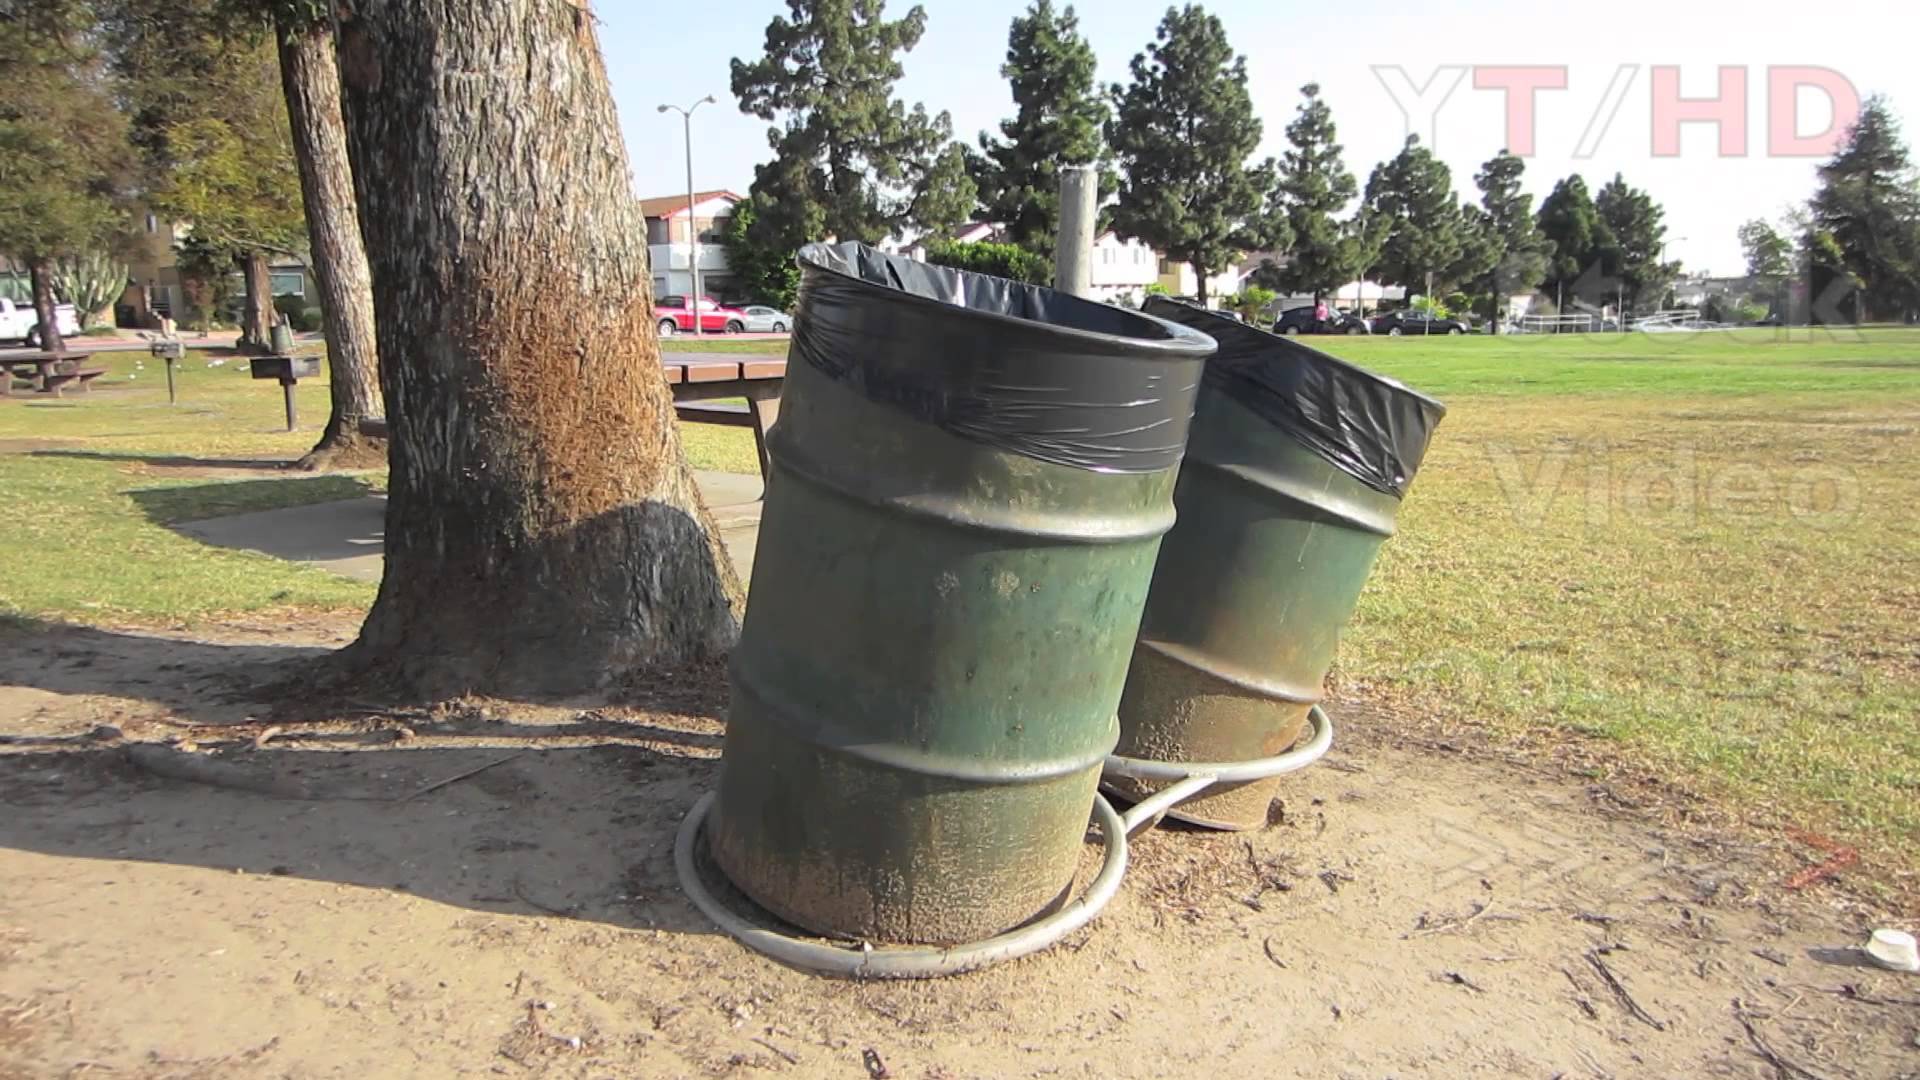 Public Park Commercial Outdoor Metal Trash Can Barrels For Garbage ...